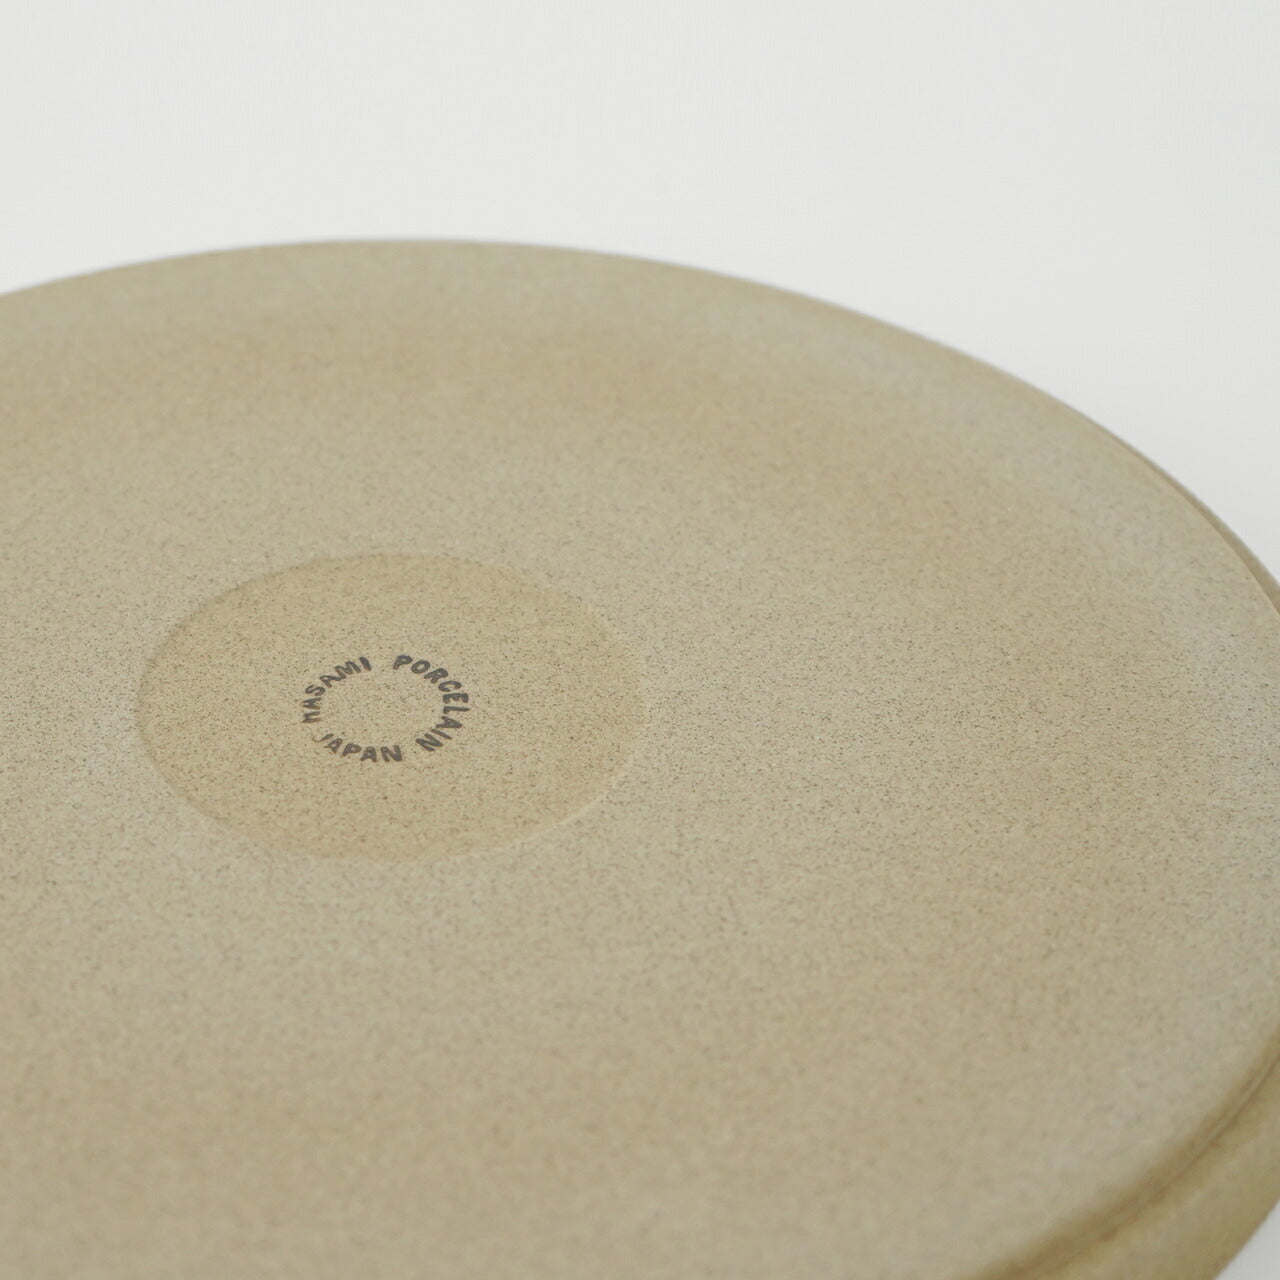 HASAMI PORCELAIN 波佐見焼き 平皿 大皿 ディナープレート 25.5cm HP005 ハサミポーセリン